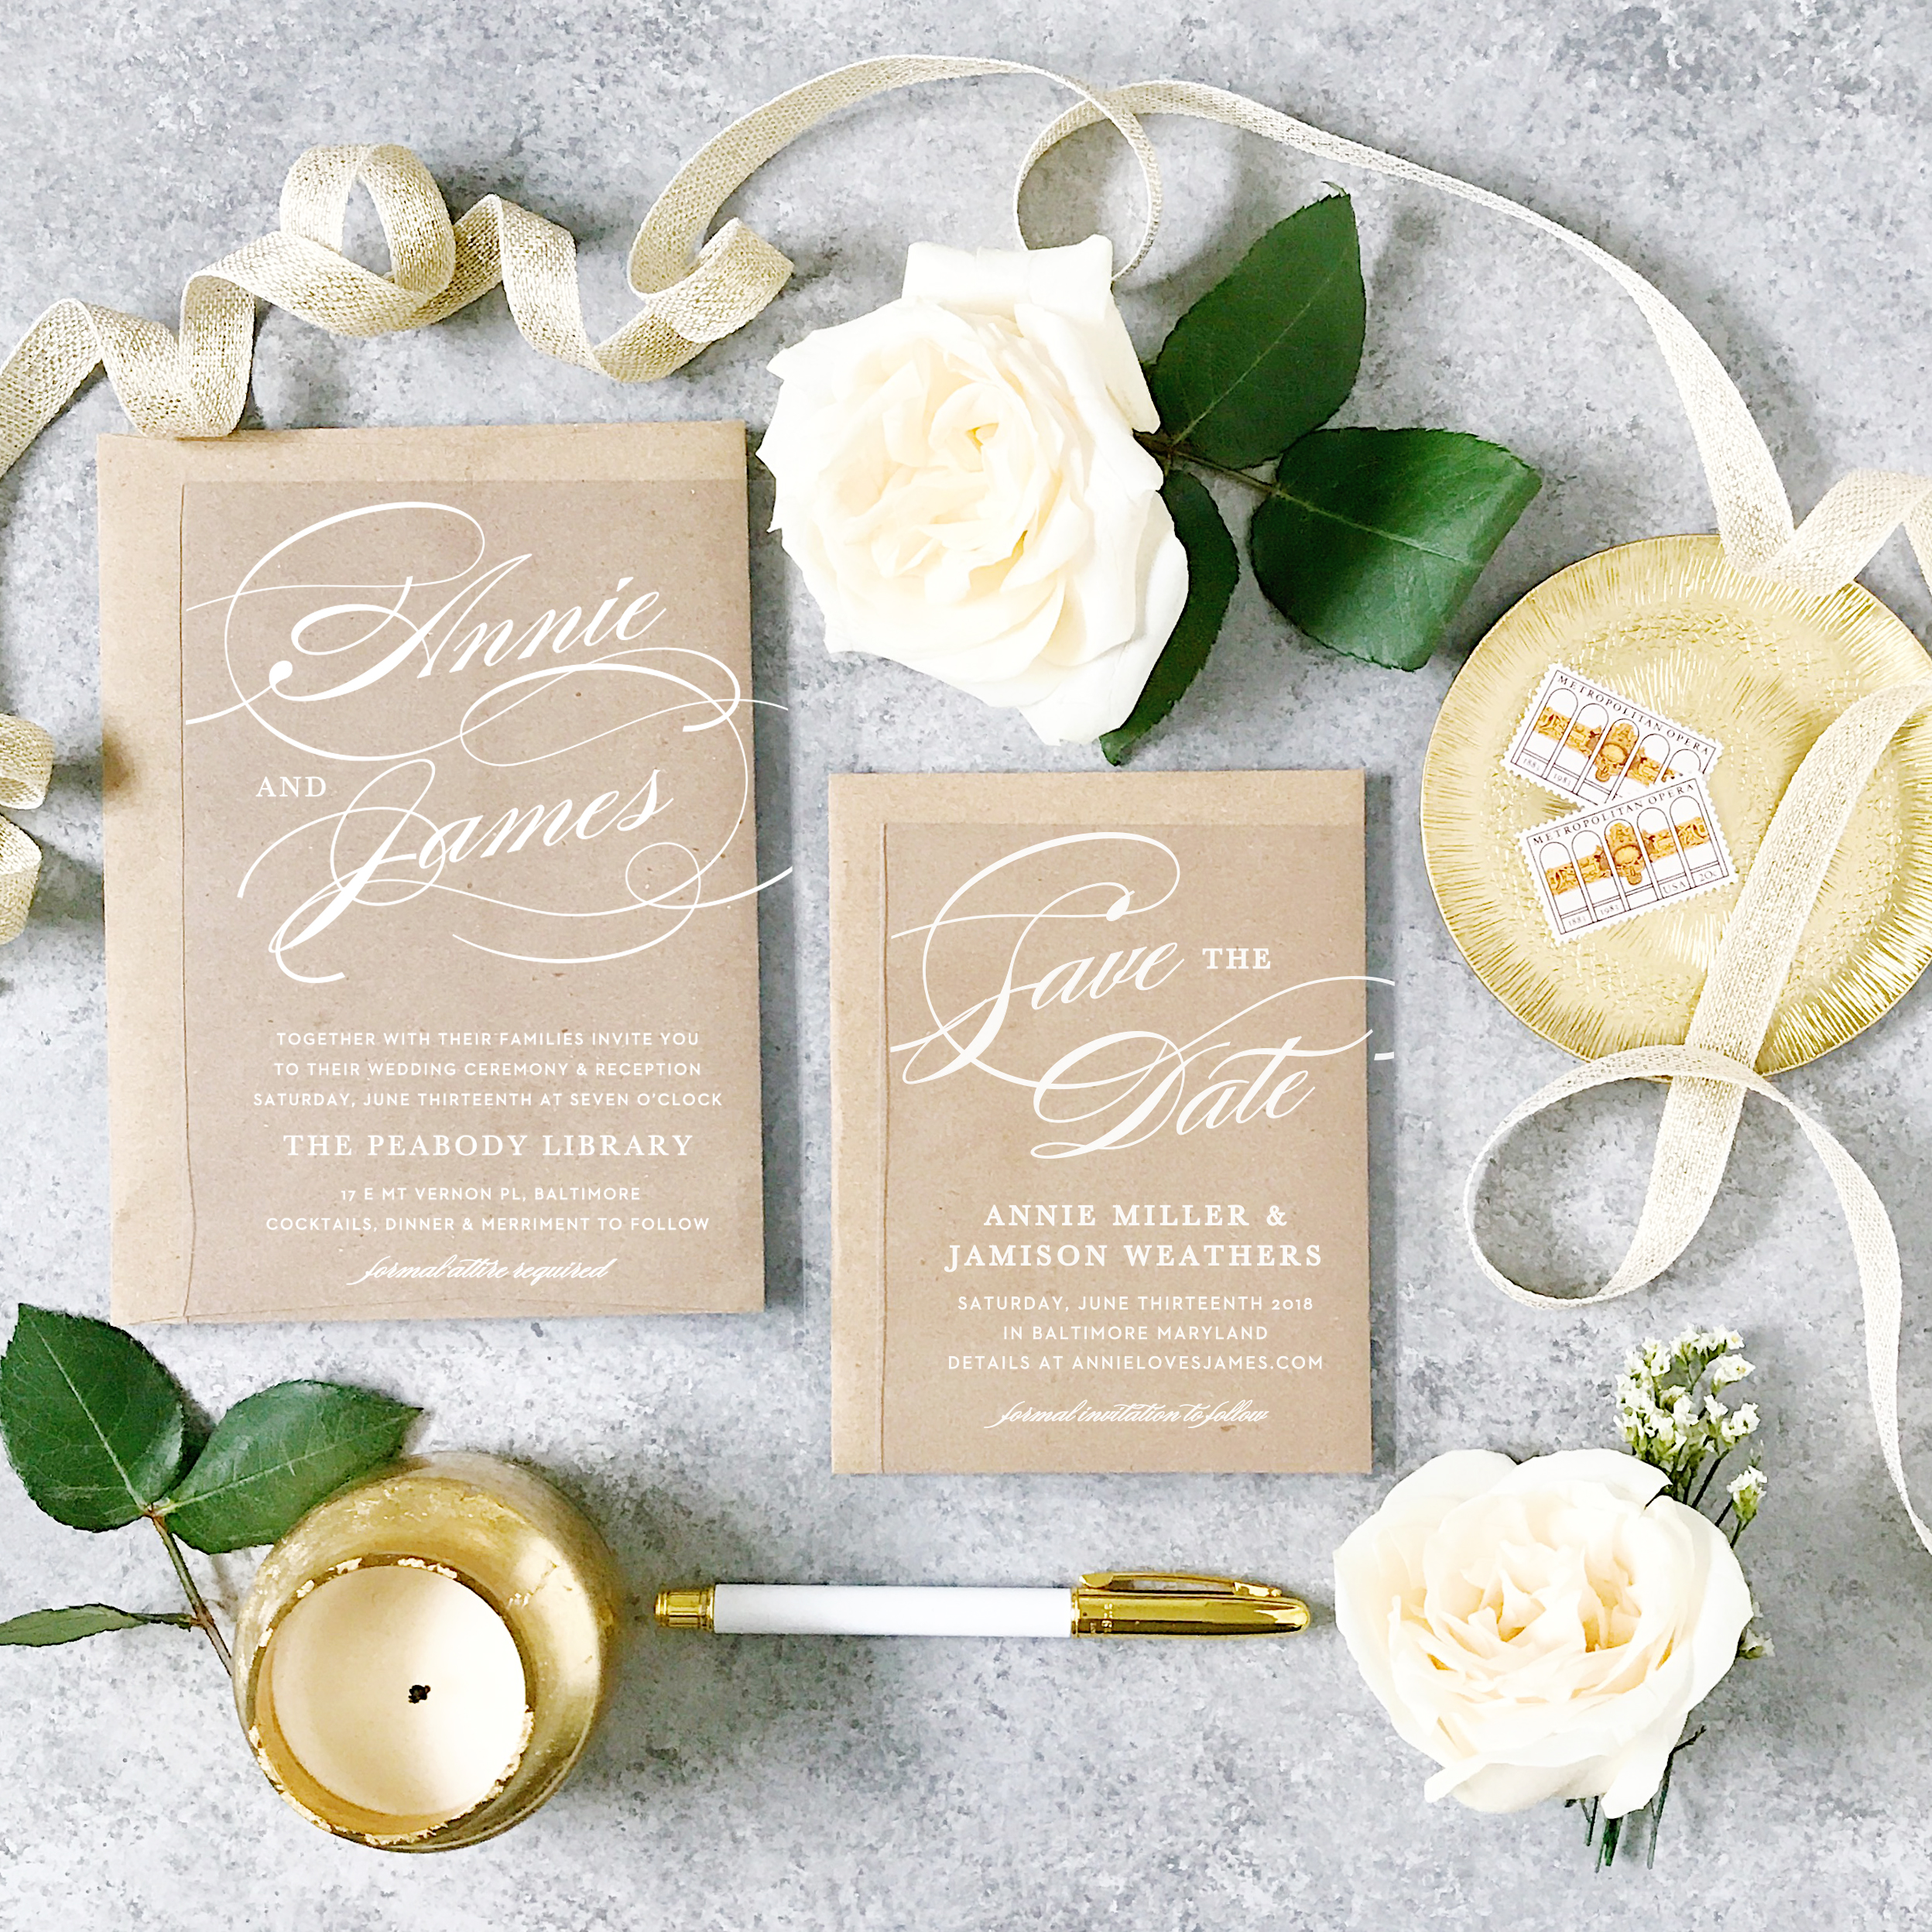 brown wedding invitations with white calligraphy surrounded by white roses. wedding invitations online basic invite